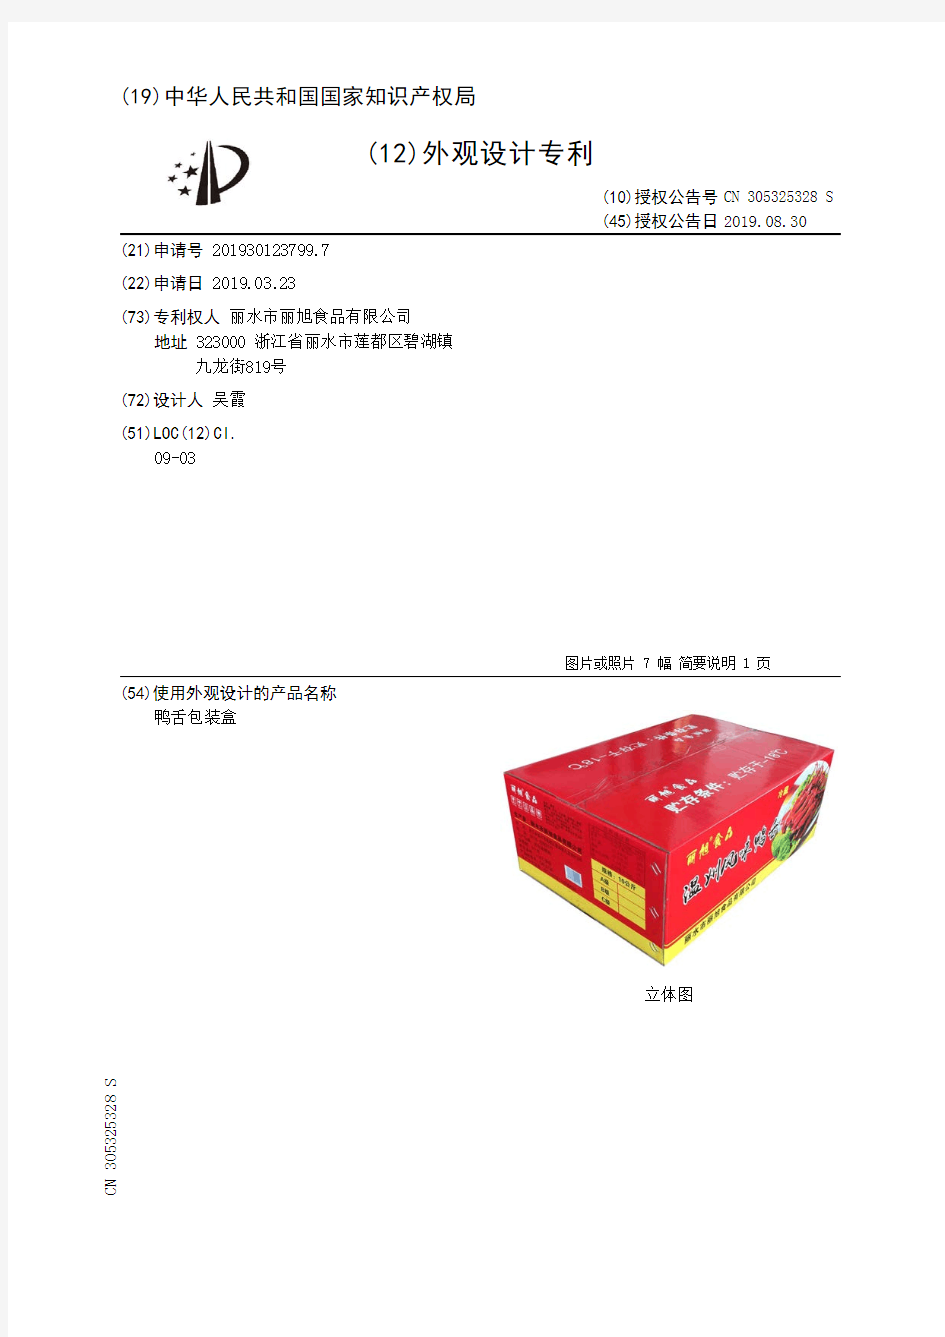 【CN305325328S】鸭舌包装盒【专利】